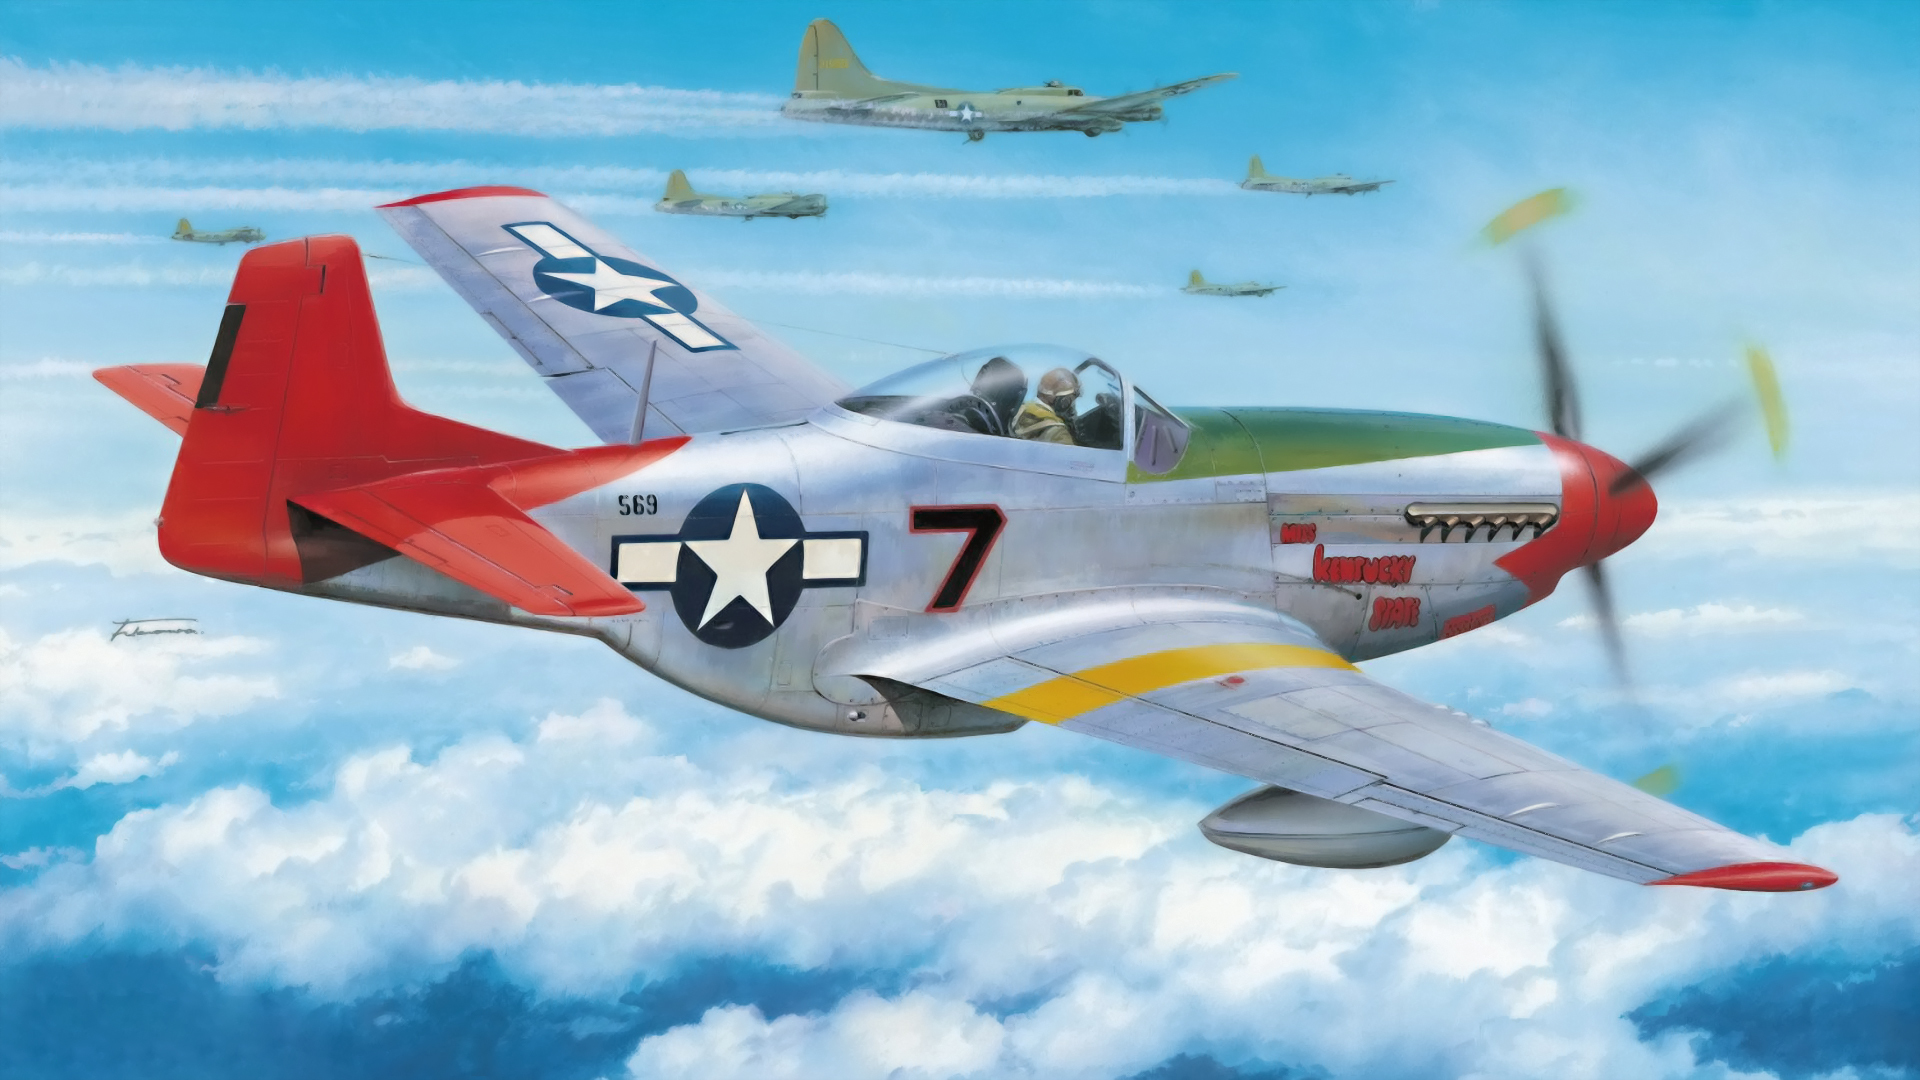 North American P-51 Mustang Wallpapers